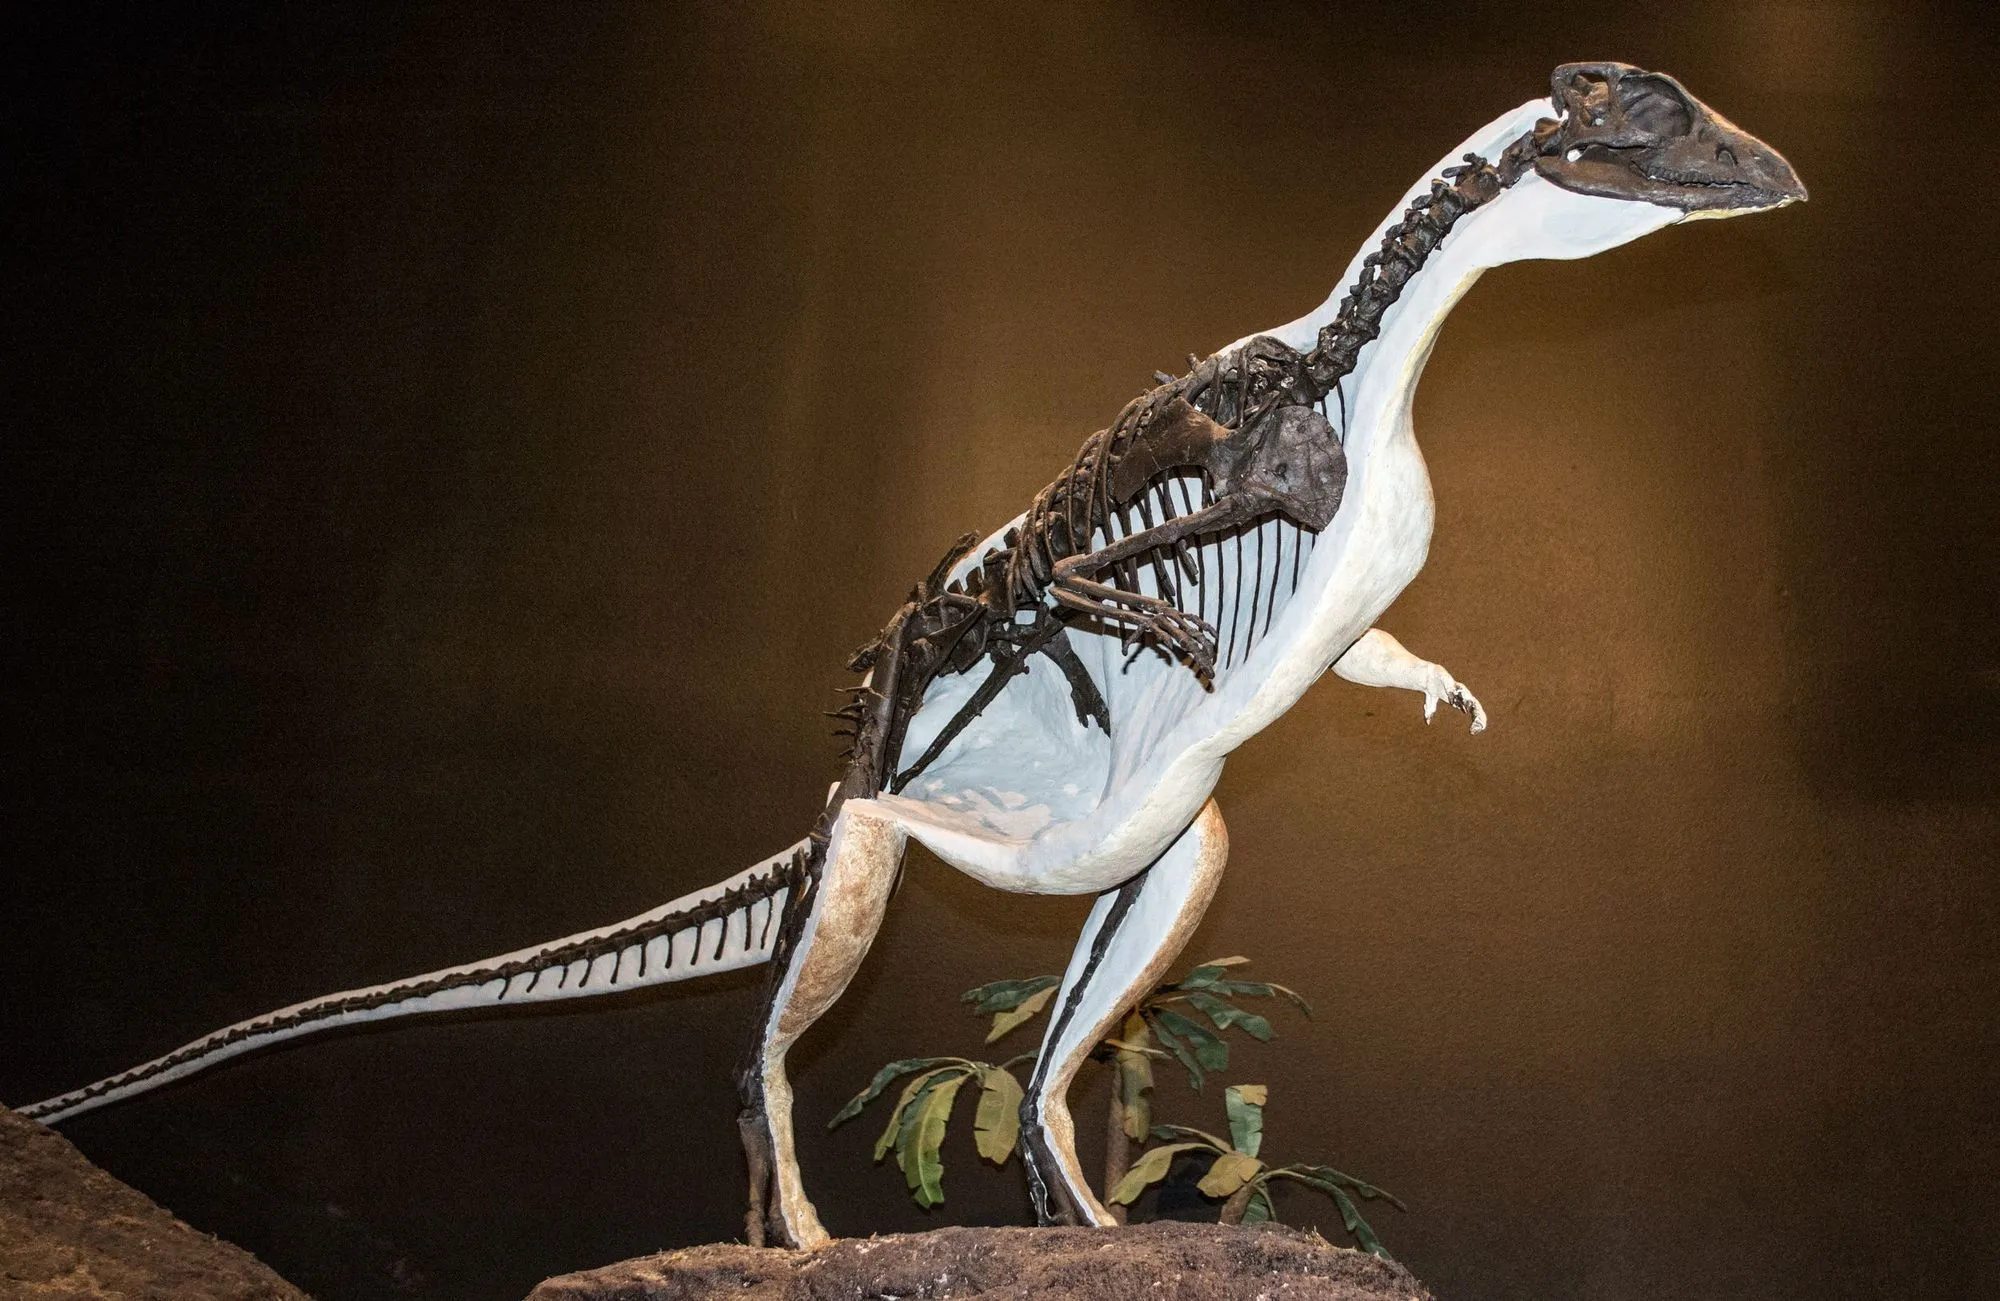 The Oryctodromeus was a bipedal dinosaur.